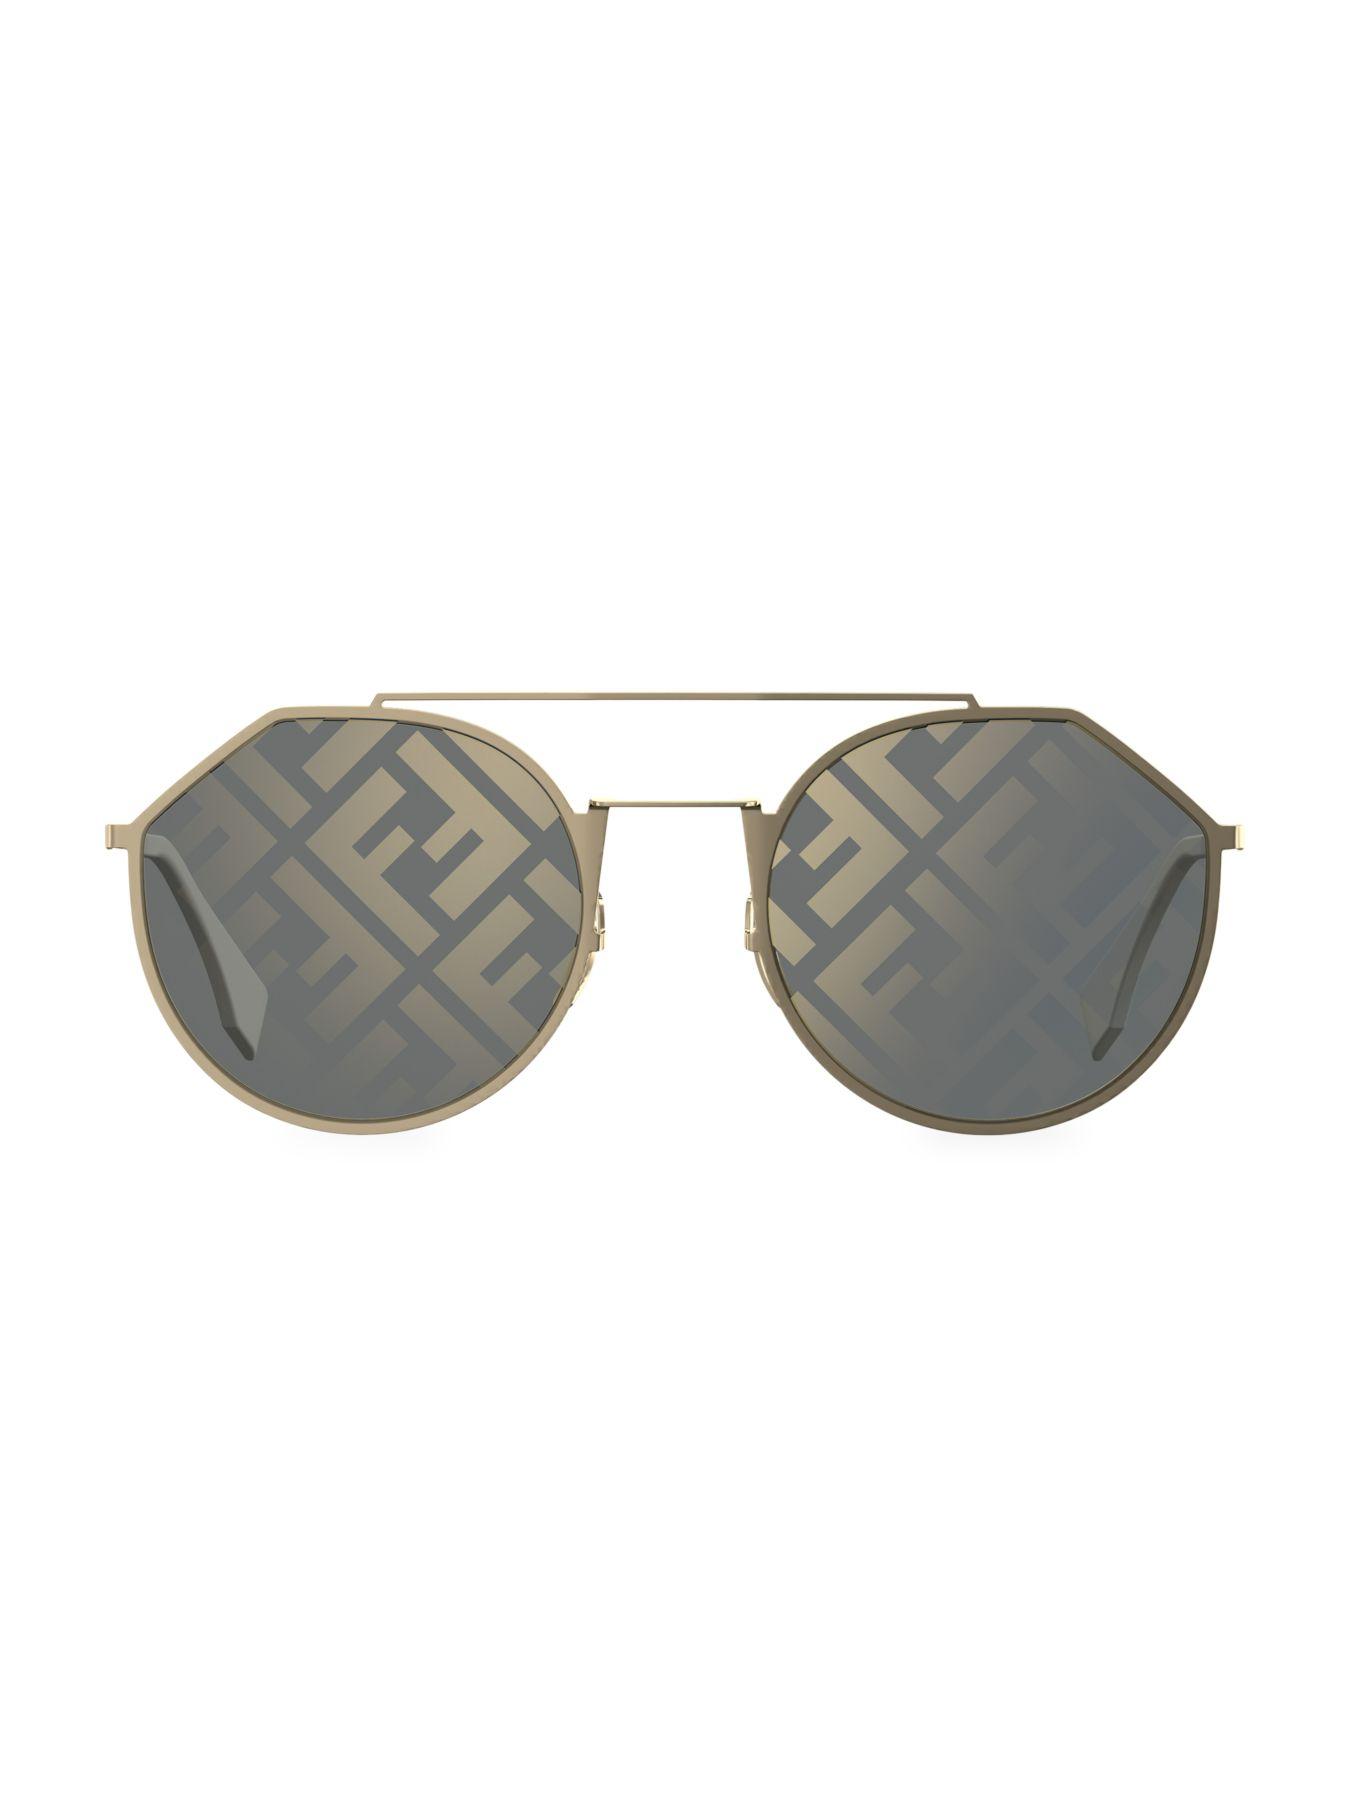 Fendi 54mm Round Sunglasses in Grey (Gray) for Men - Lyst